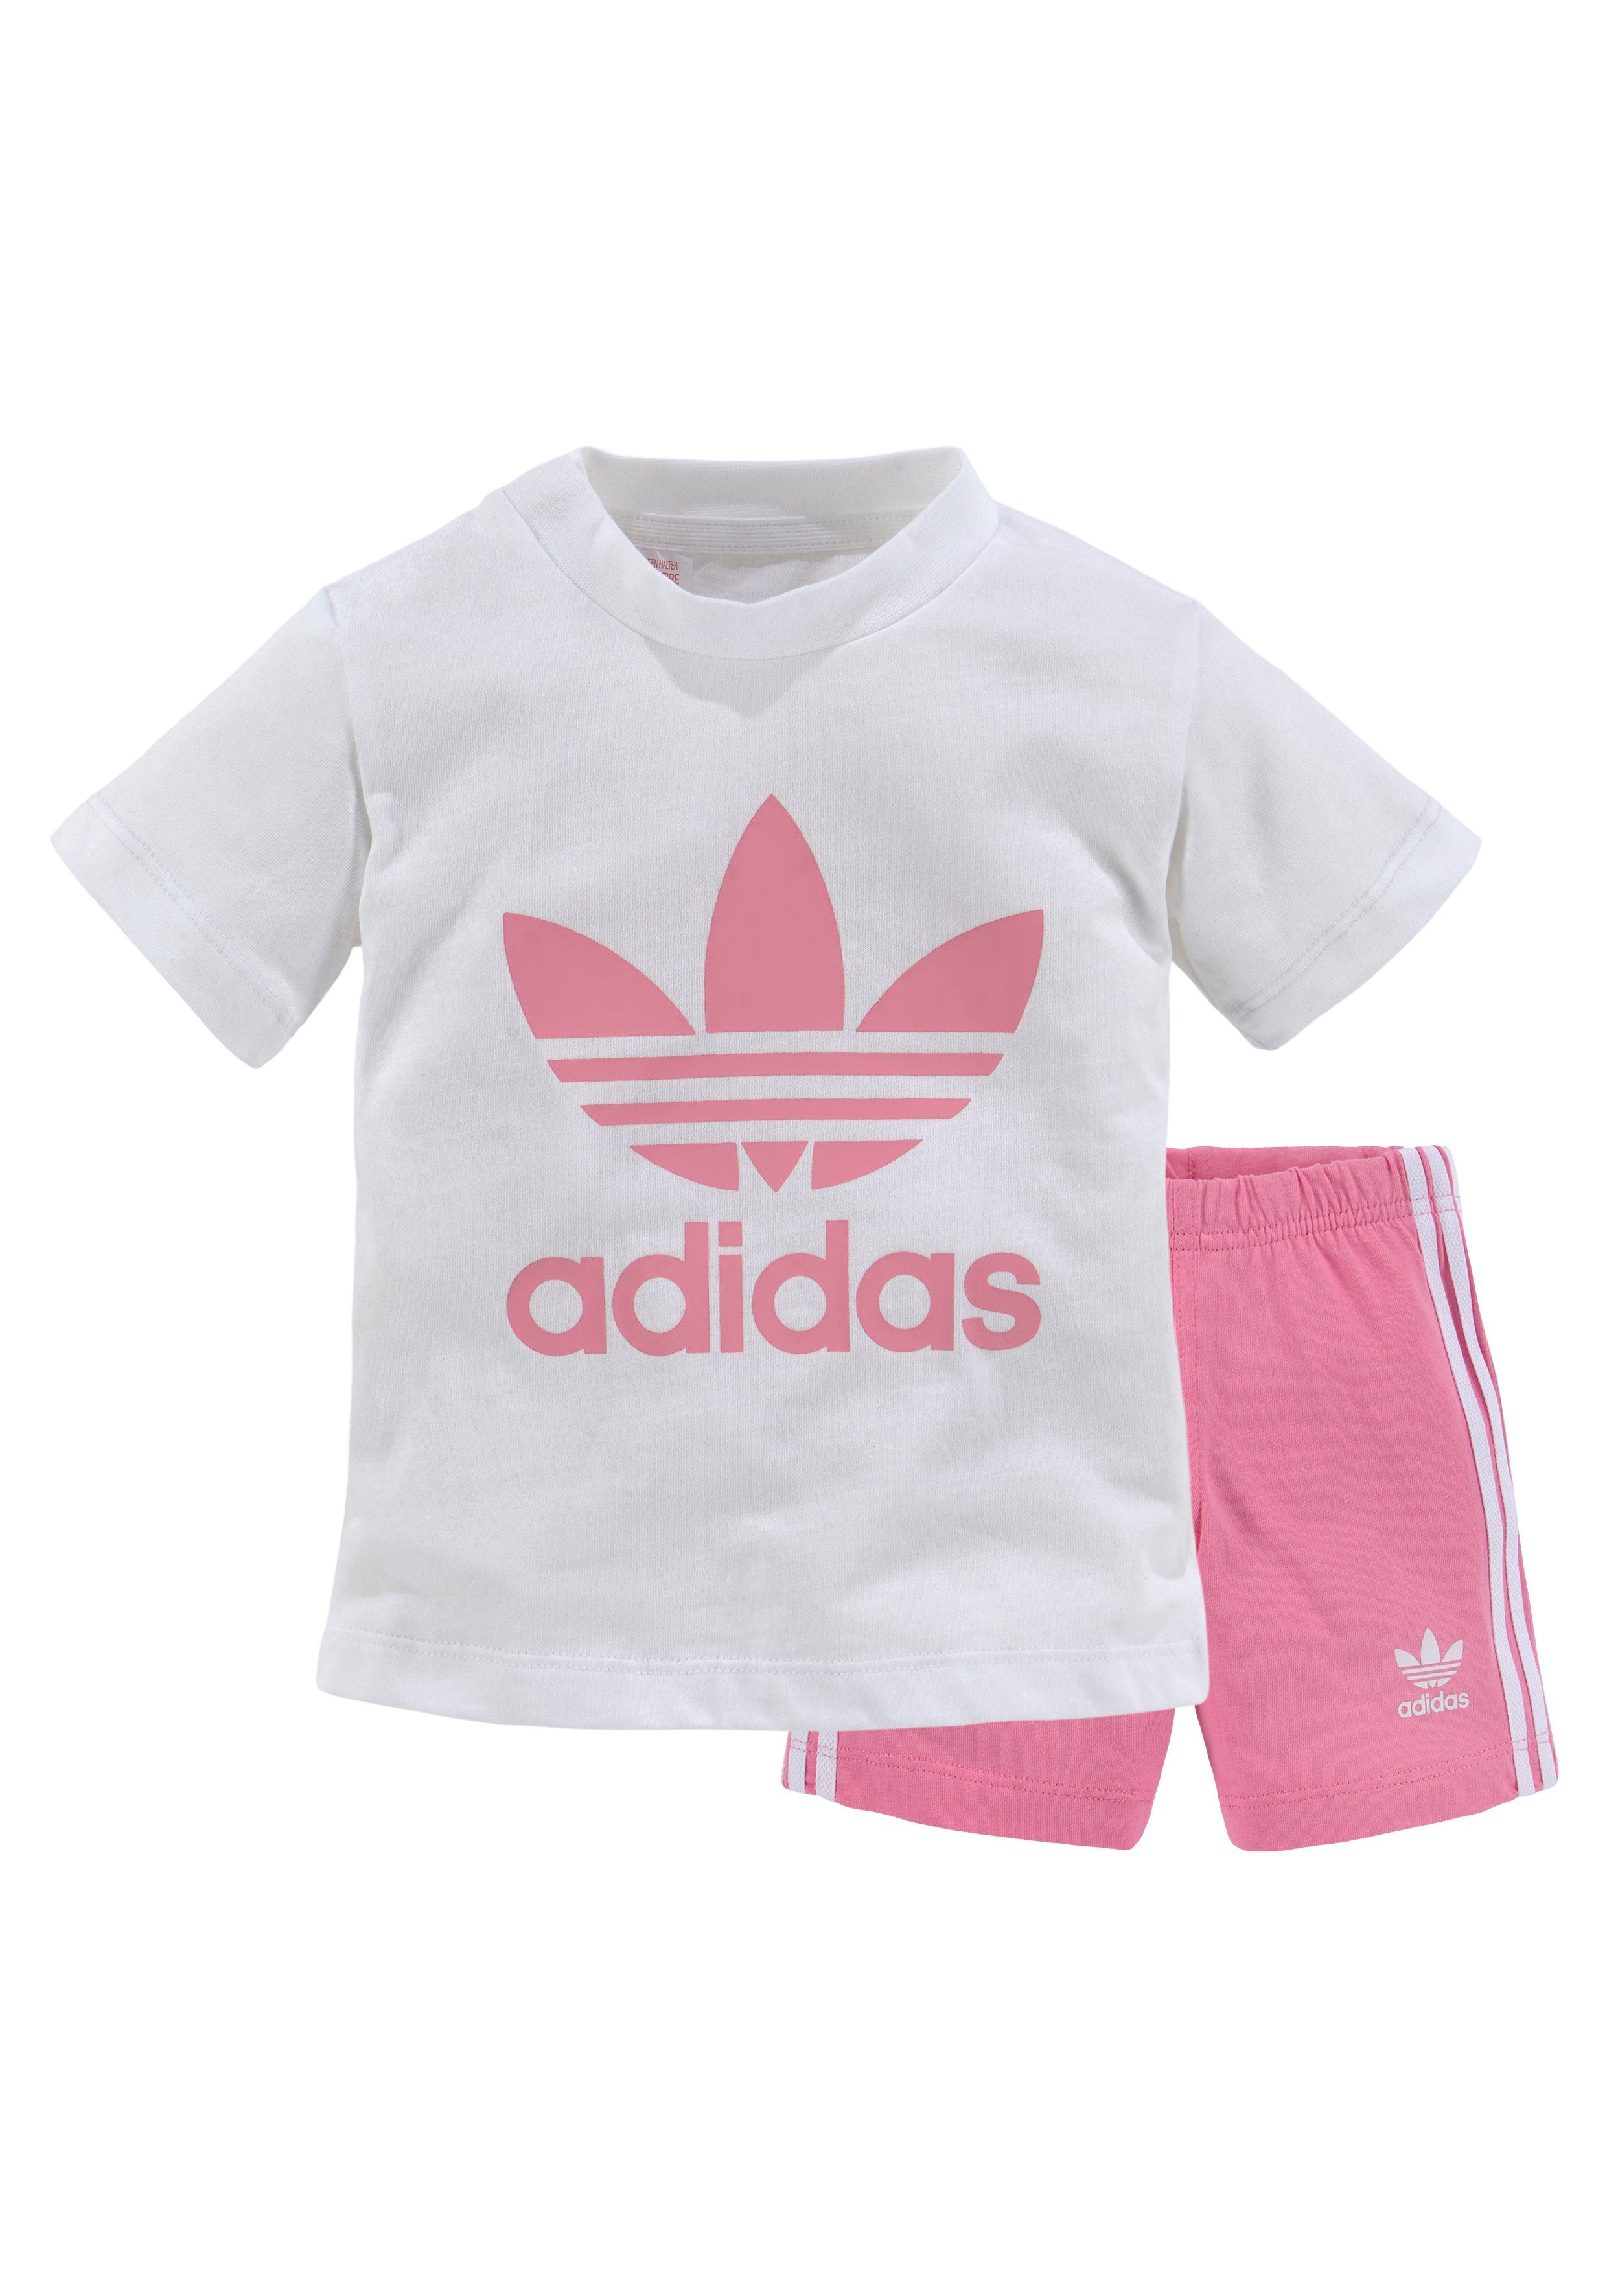 adidas Originals White SHORTS Pink & Bliss Shorts UND SET TREFOIL (Set) / T-Shirt